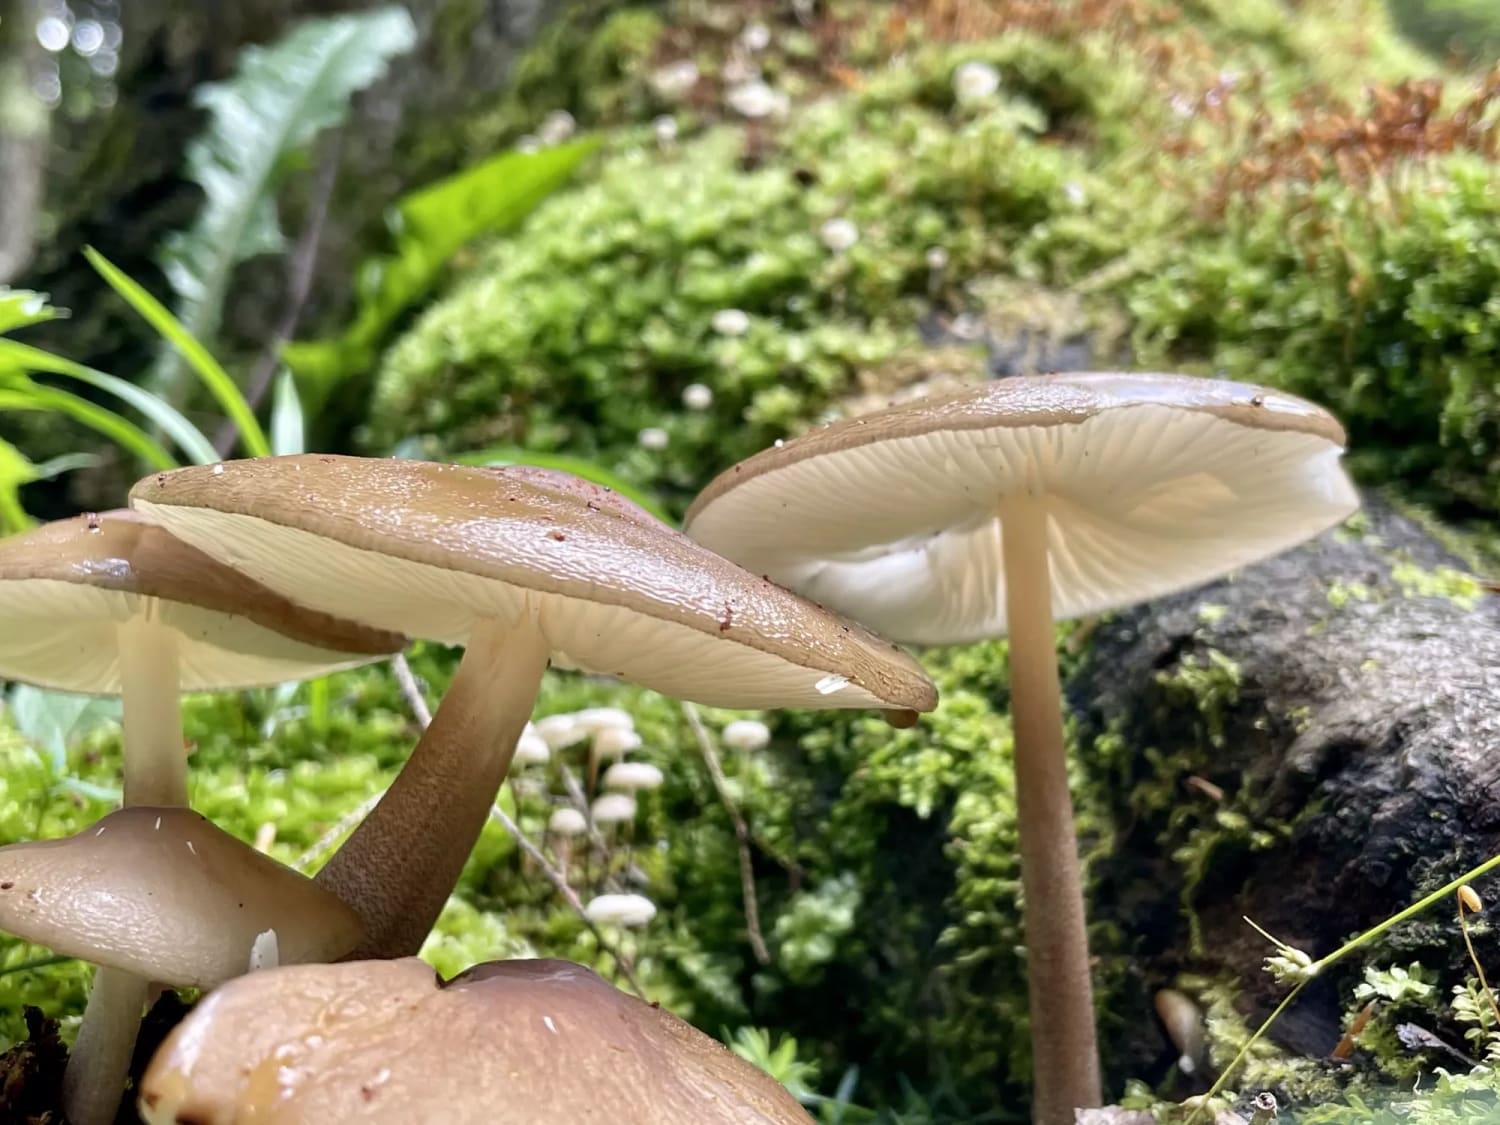 Love upskirt mushrooms shots! Took these last weekend in Northern Maine